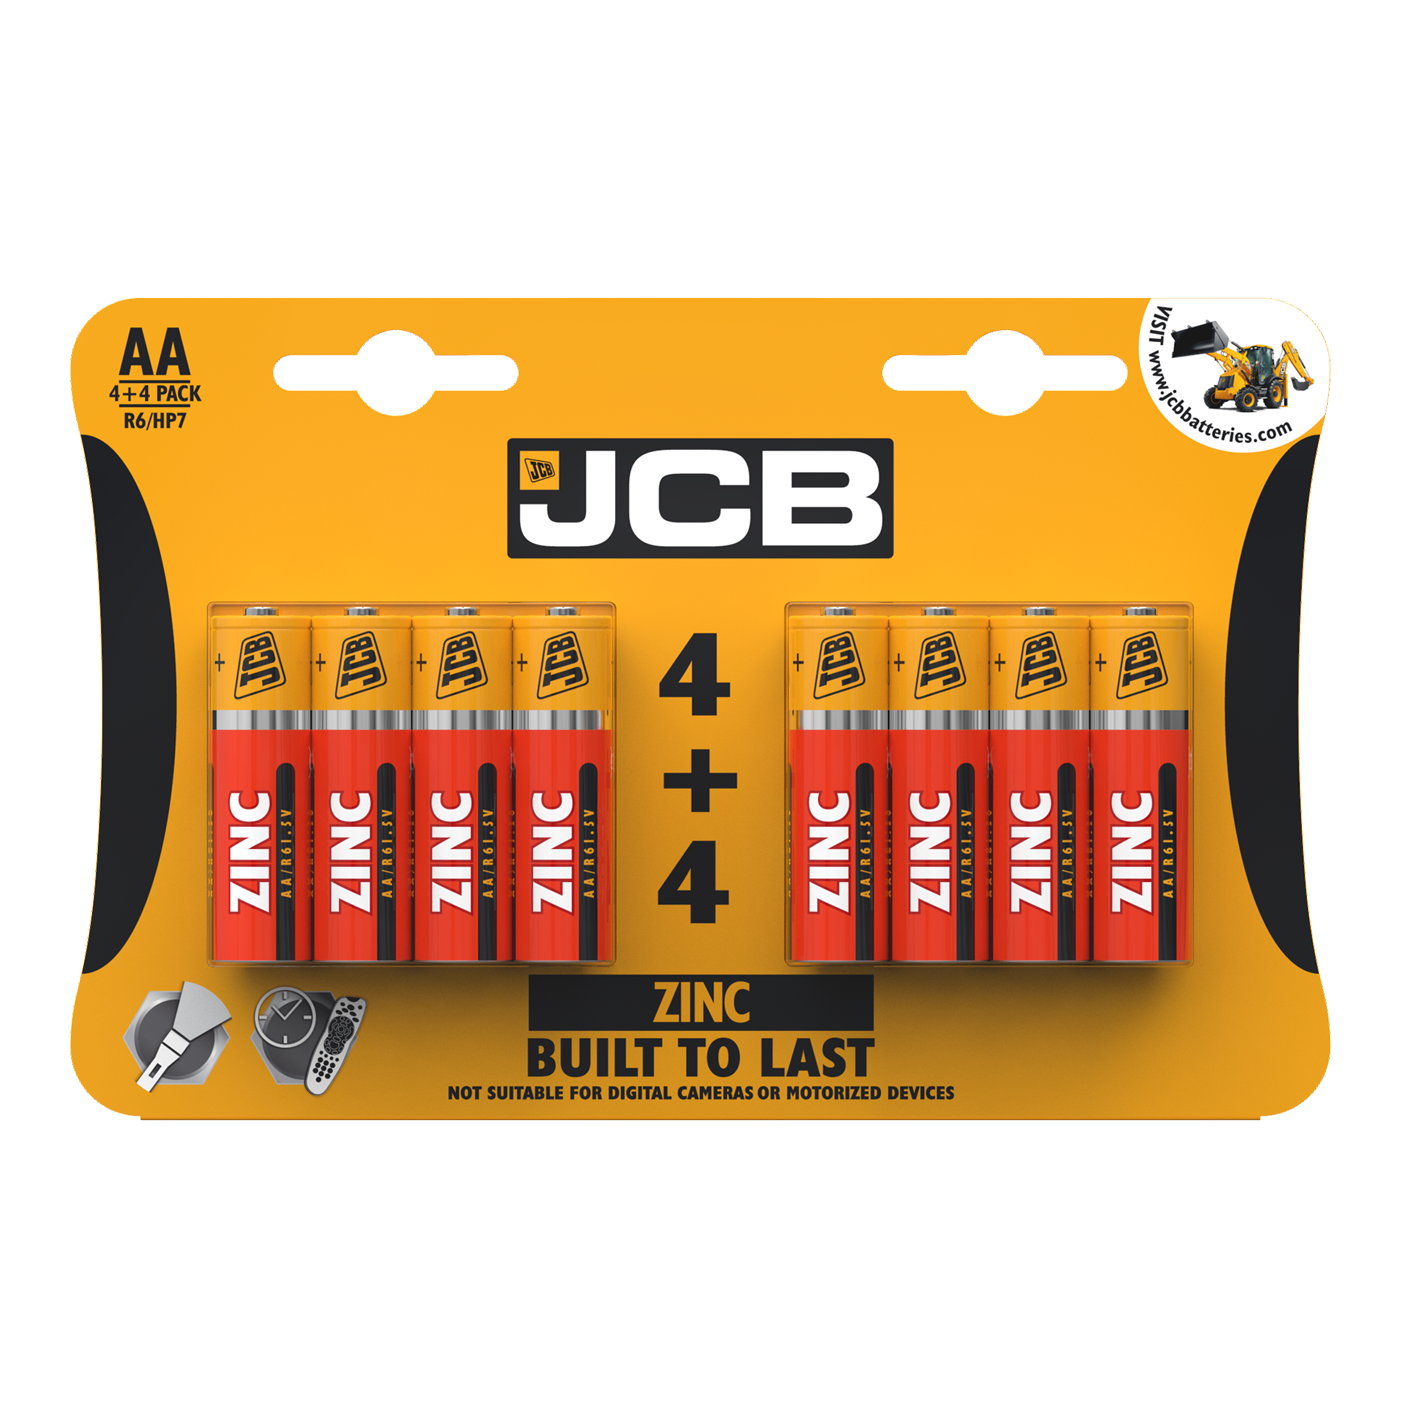 JCB AA Zinc Batteries, Pack of 4+4